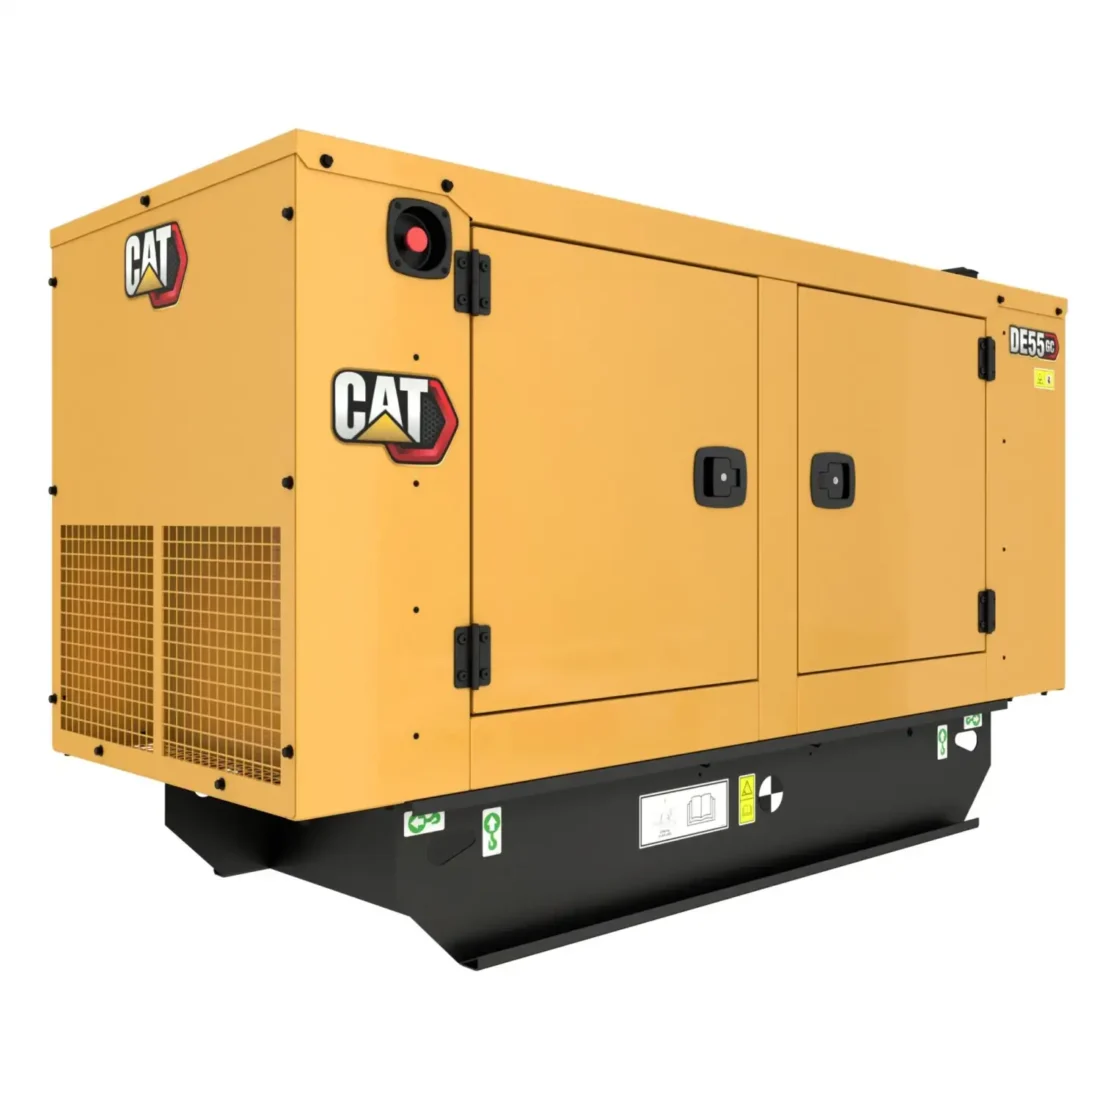 CAT DE55 GC 55kVA Diesel Generator